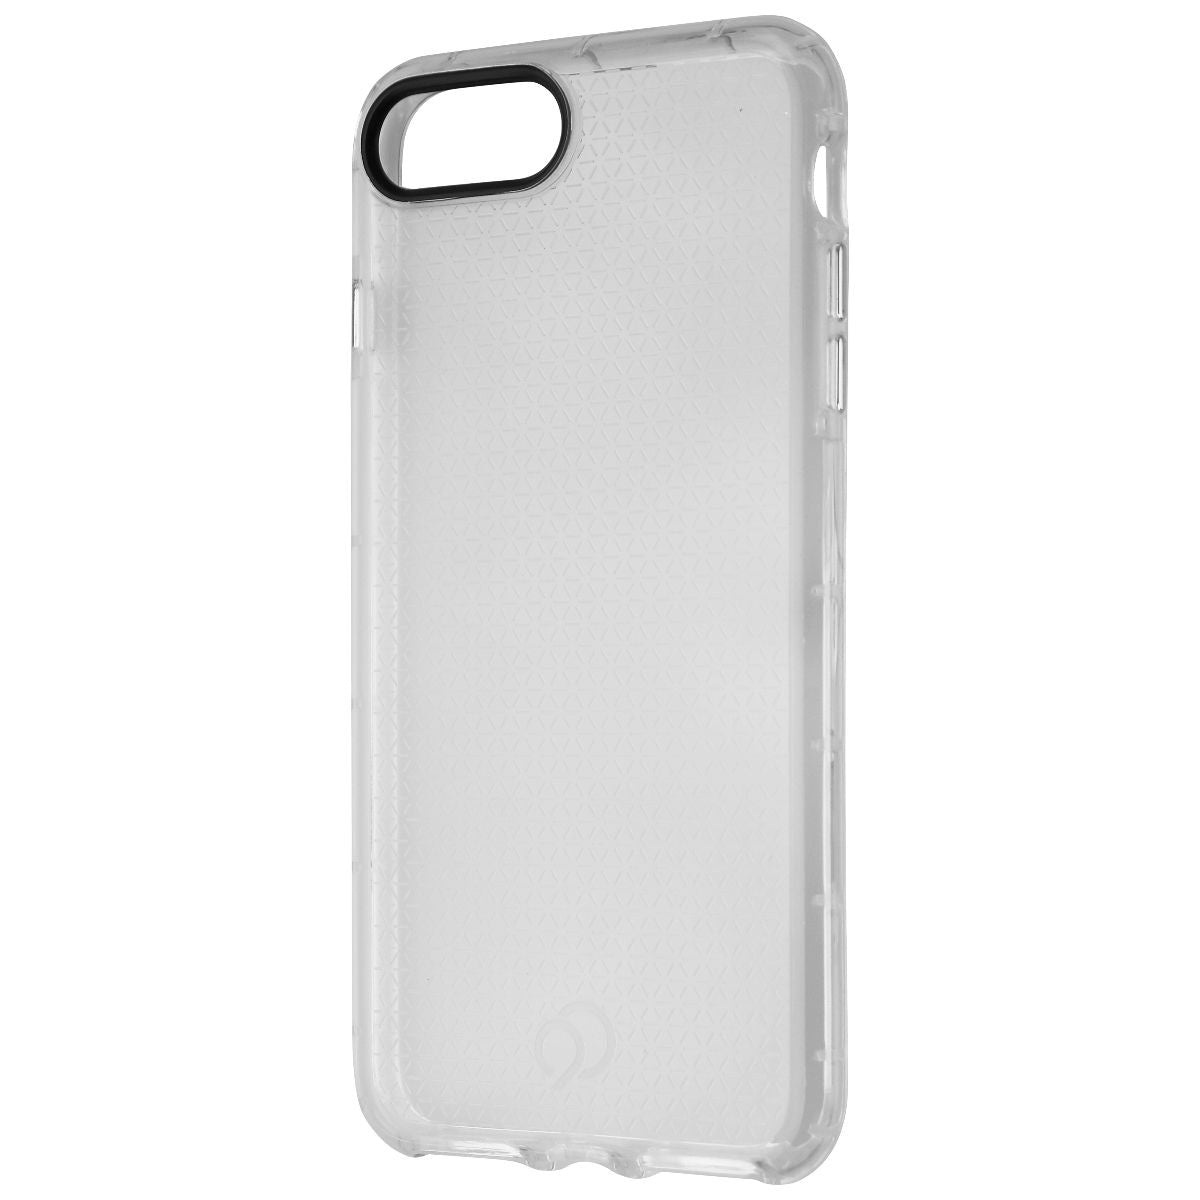 Nimbus9 Phantom 2 Series Gel Case for iPhone 8 Plus/7 Plus/6s Plus - Clear Cell Phone - Cases, Covers & Skins Nimbus9    - Simple Cell Bulk Wholesale Pricing - USA Seller